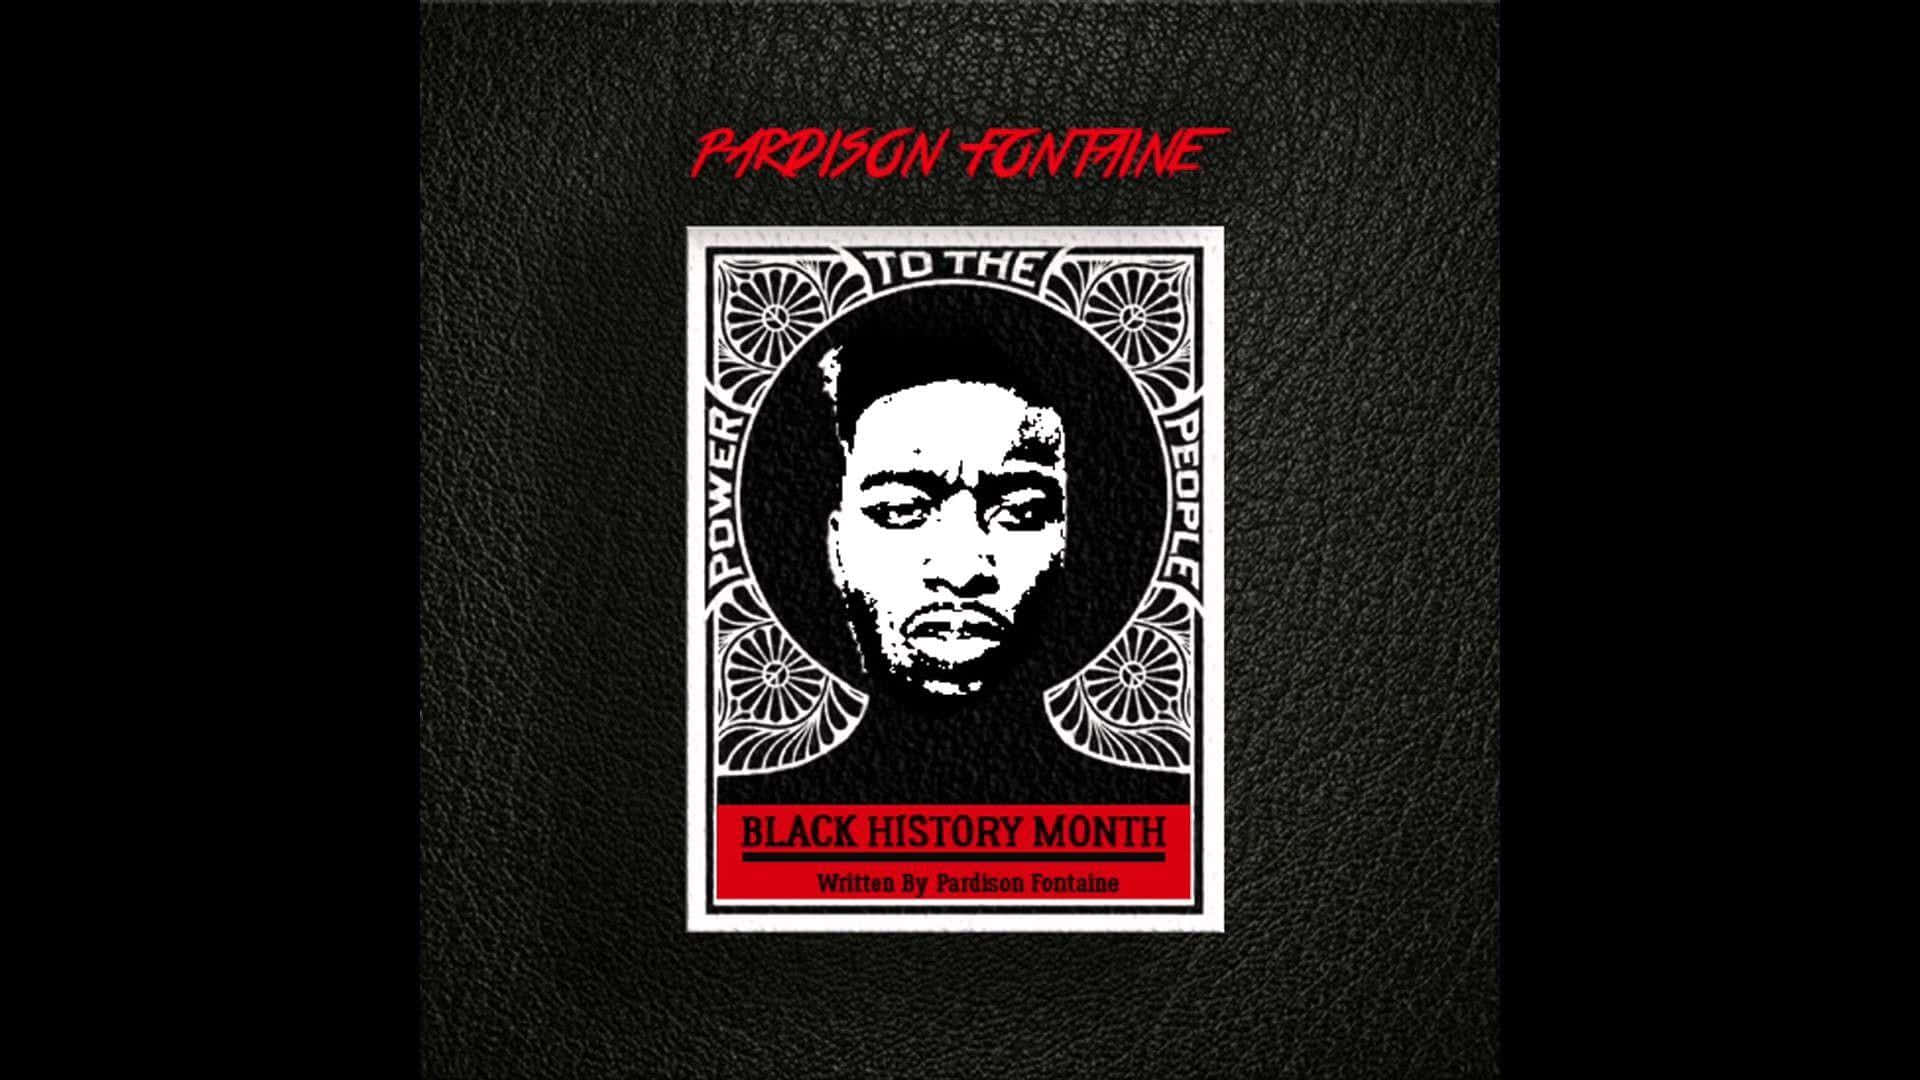 Pardison Fontaine Album Cover Black History Month Background